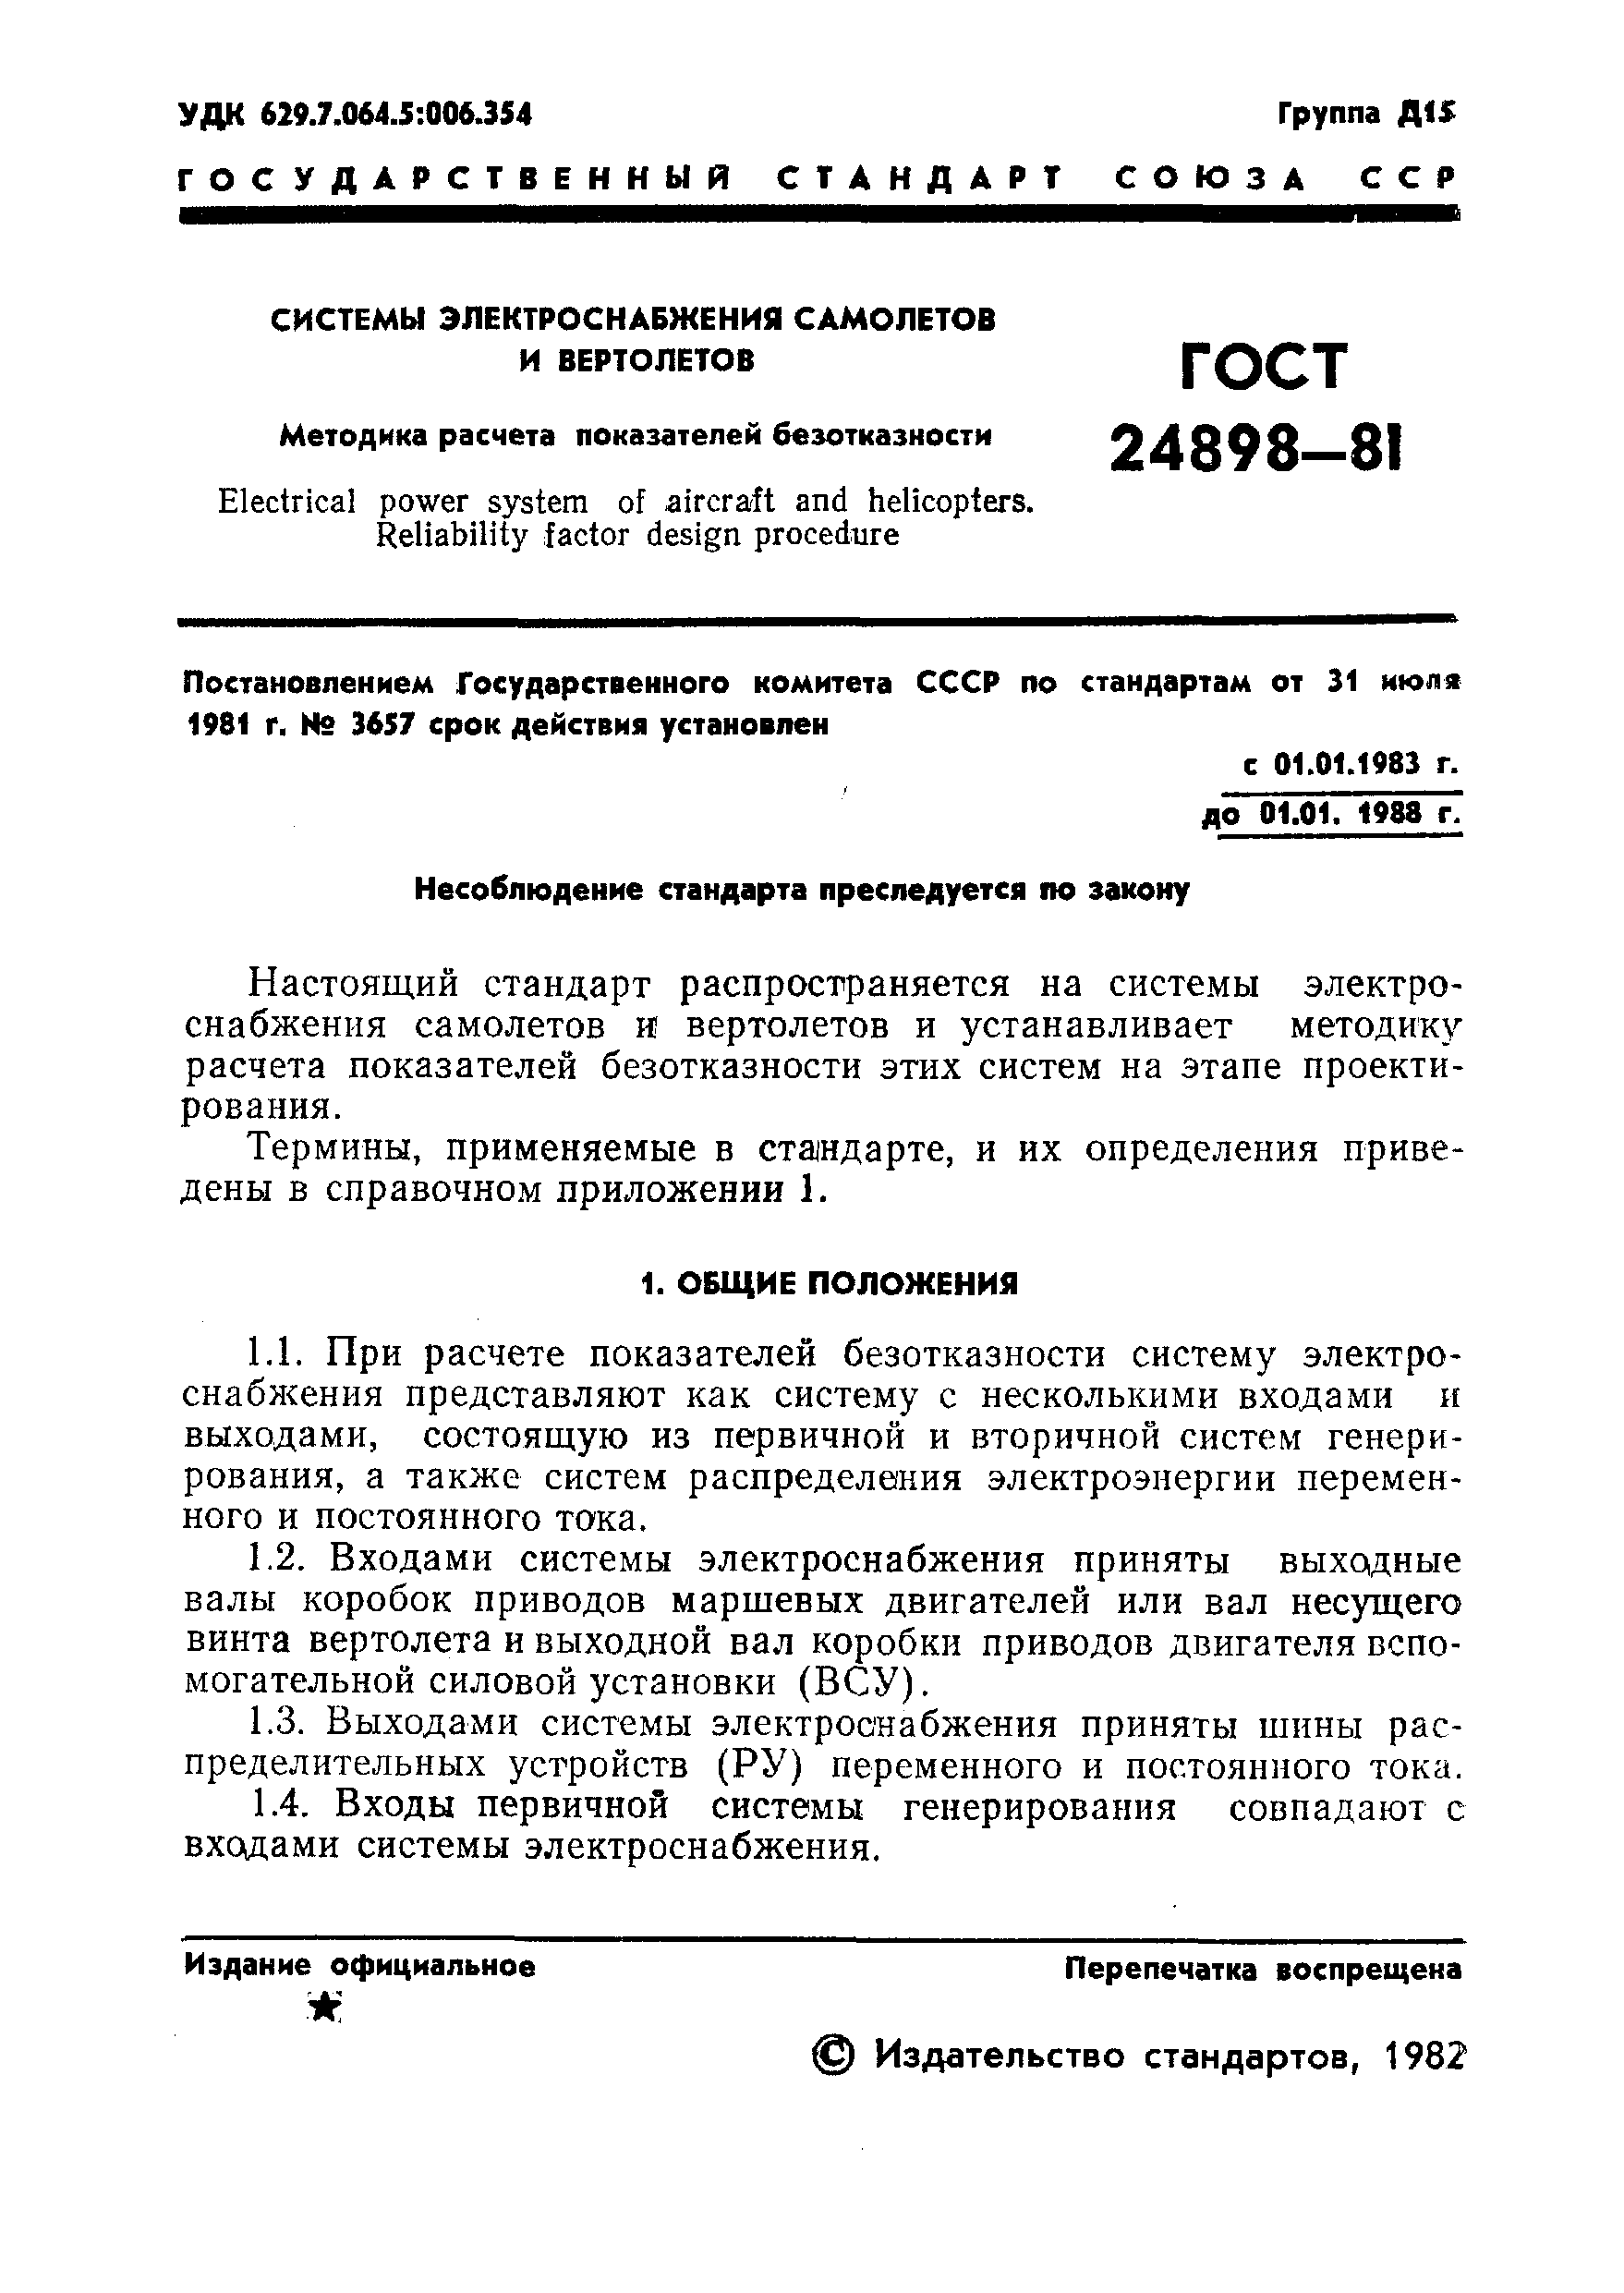 ГОСТ 24898-81